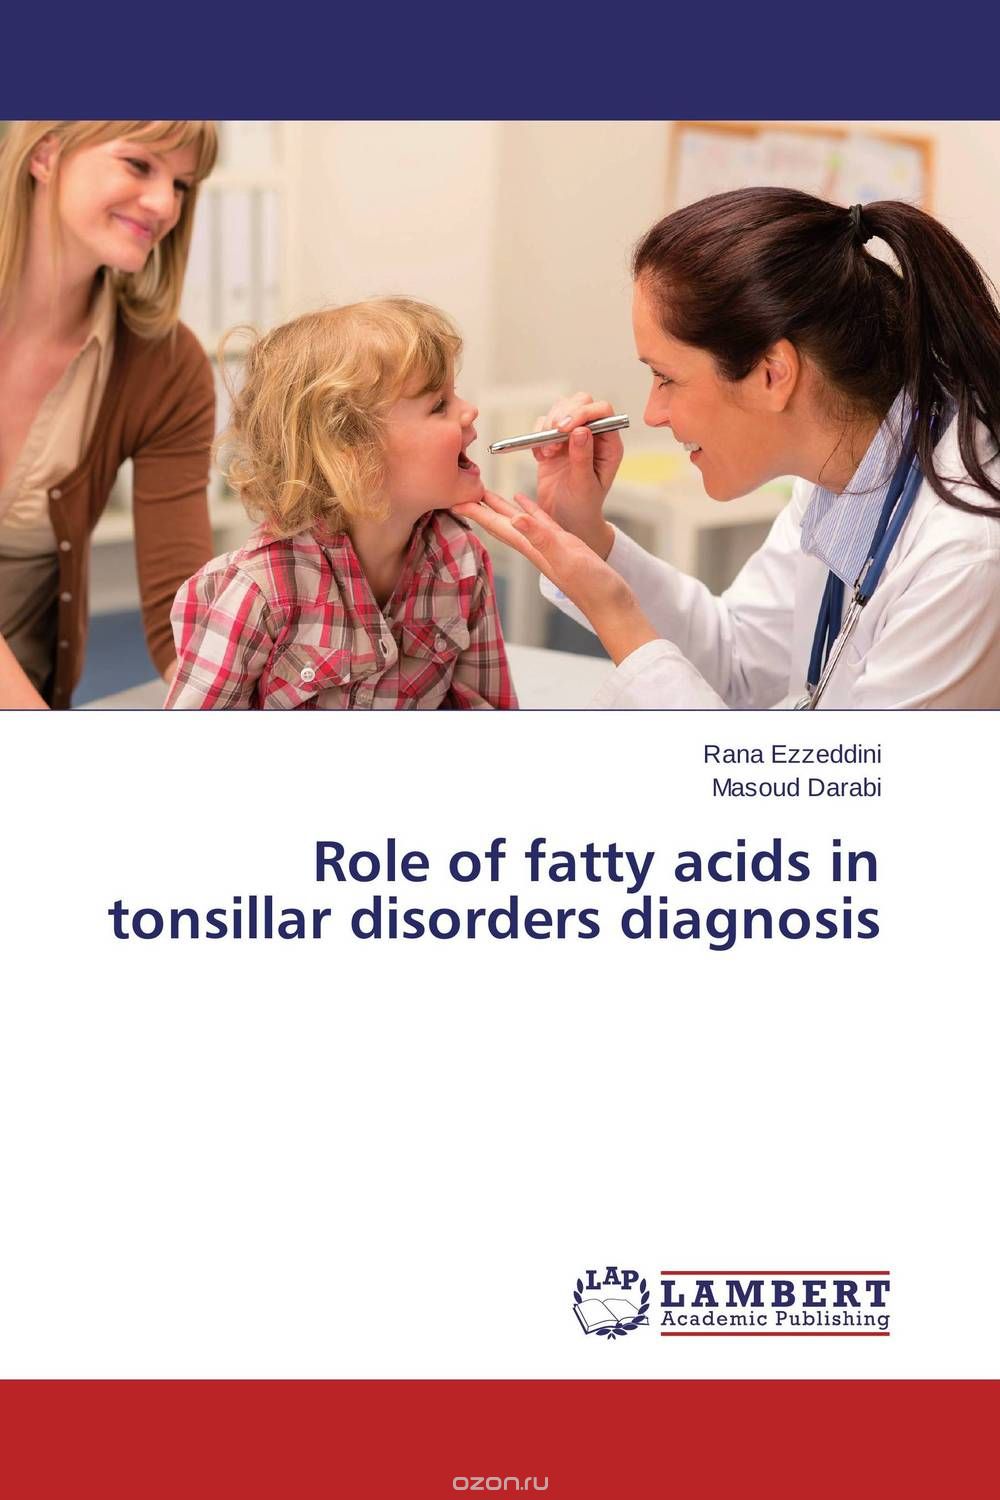 Скачать книгу "Role of fatty acids in tonsillar disorders diagnosis"